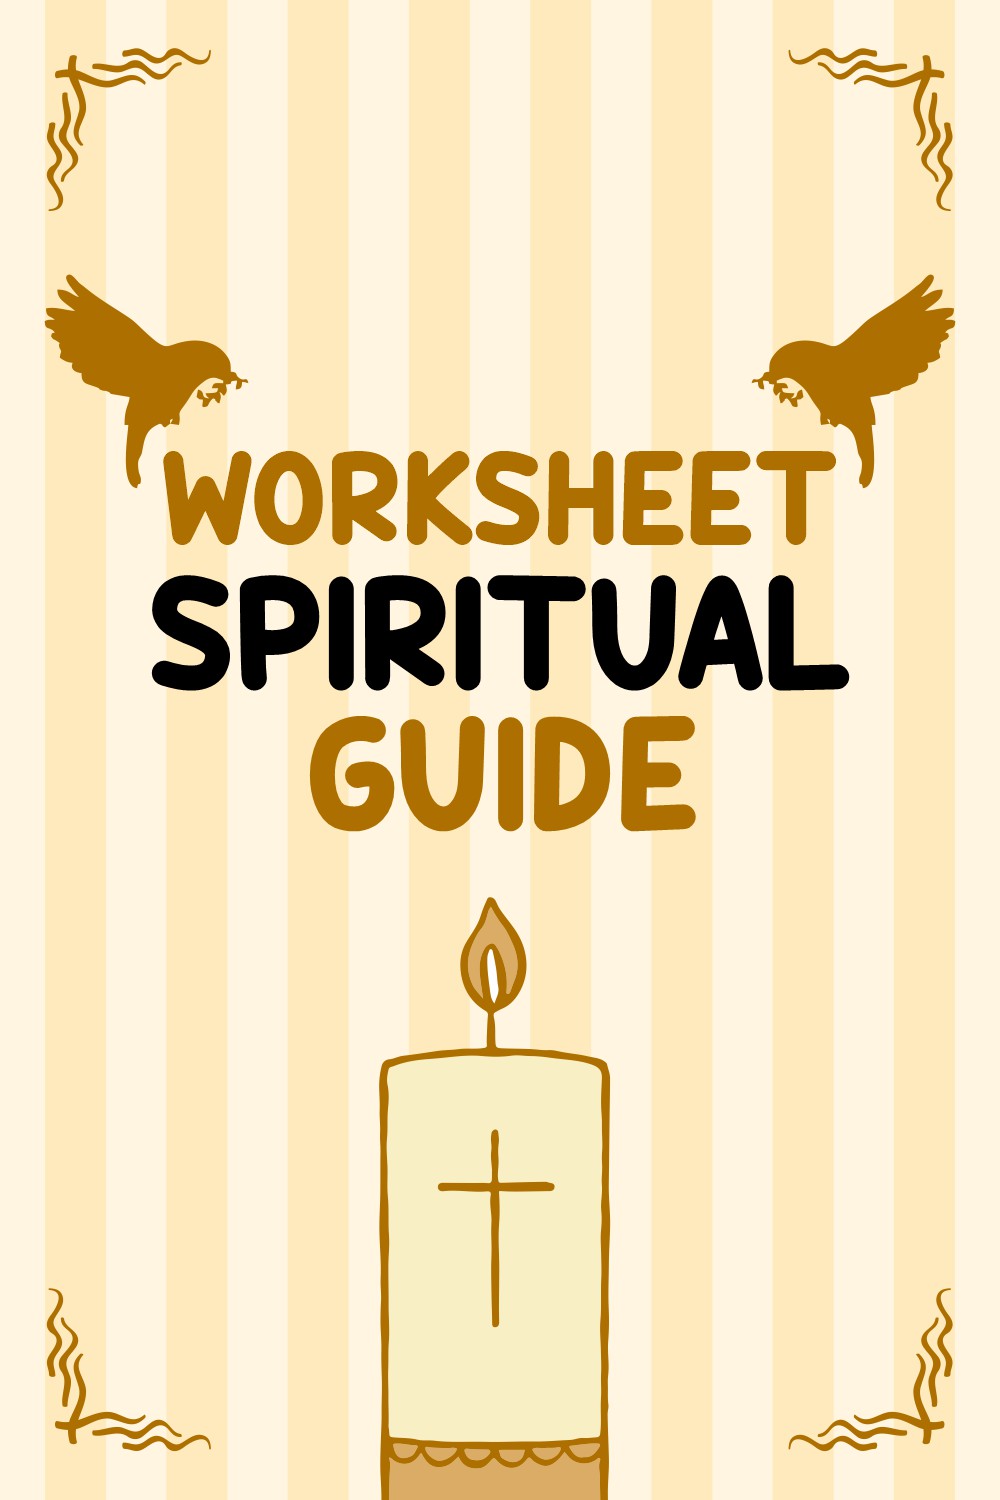 17 Images of Worksheet Spiritual Guide